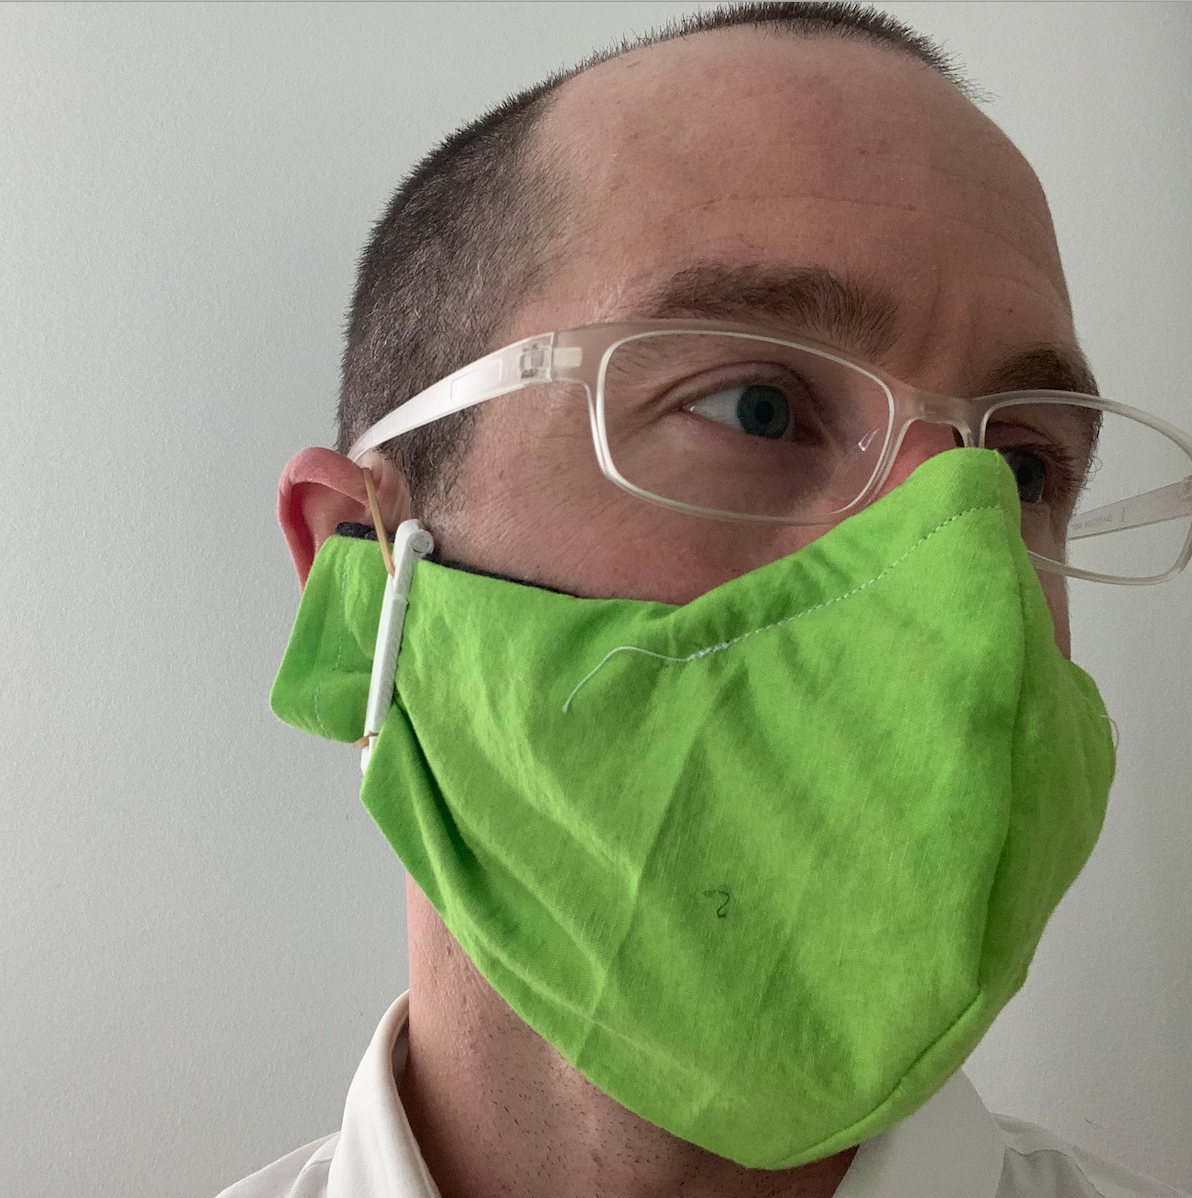 Michael Tunkey wearing DIY prototype face mask